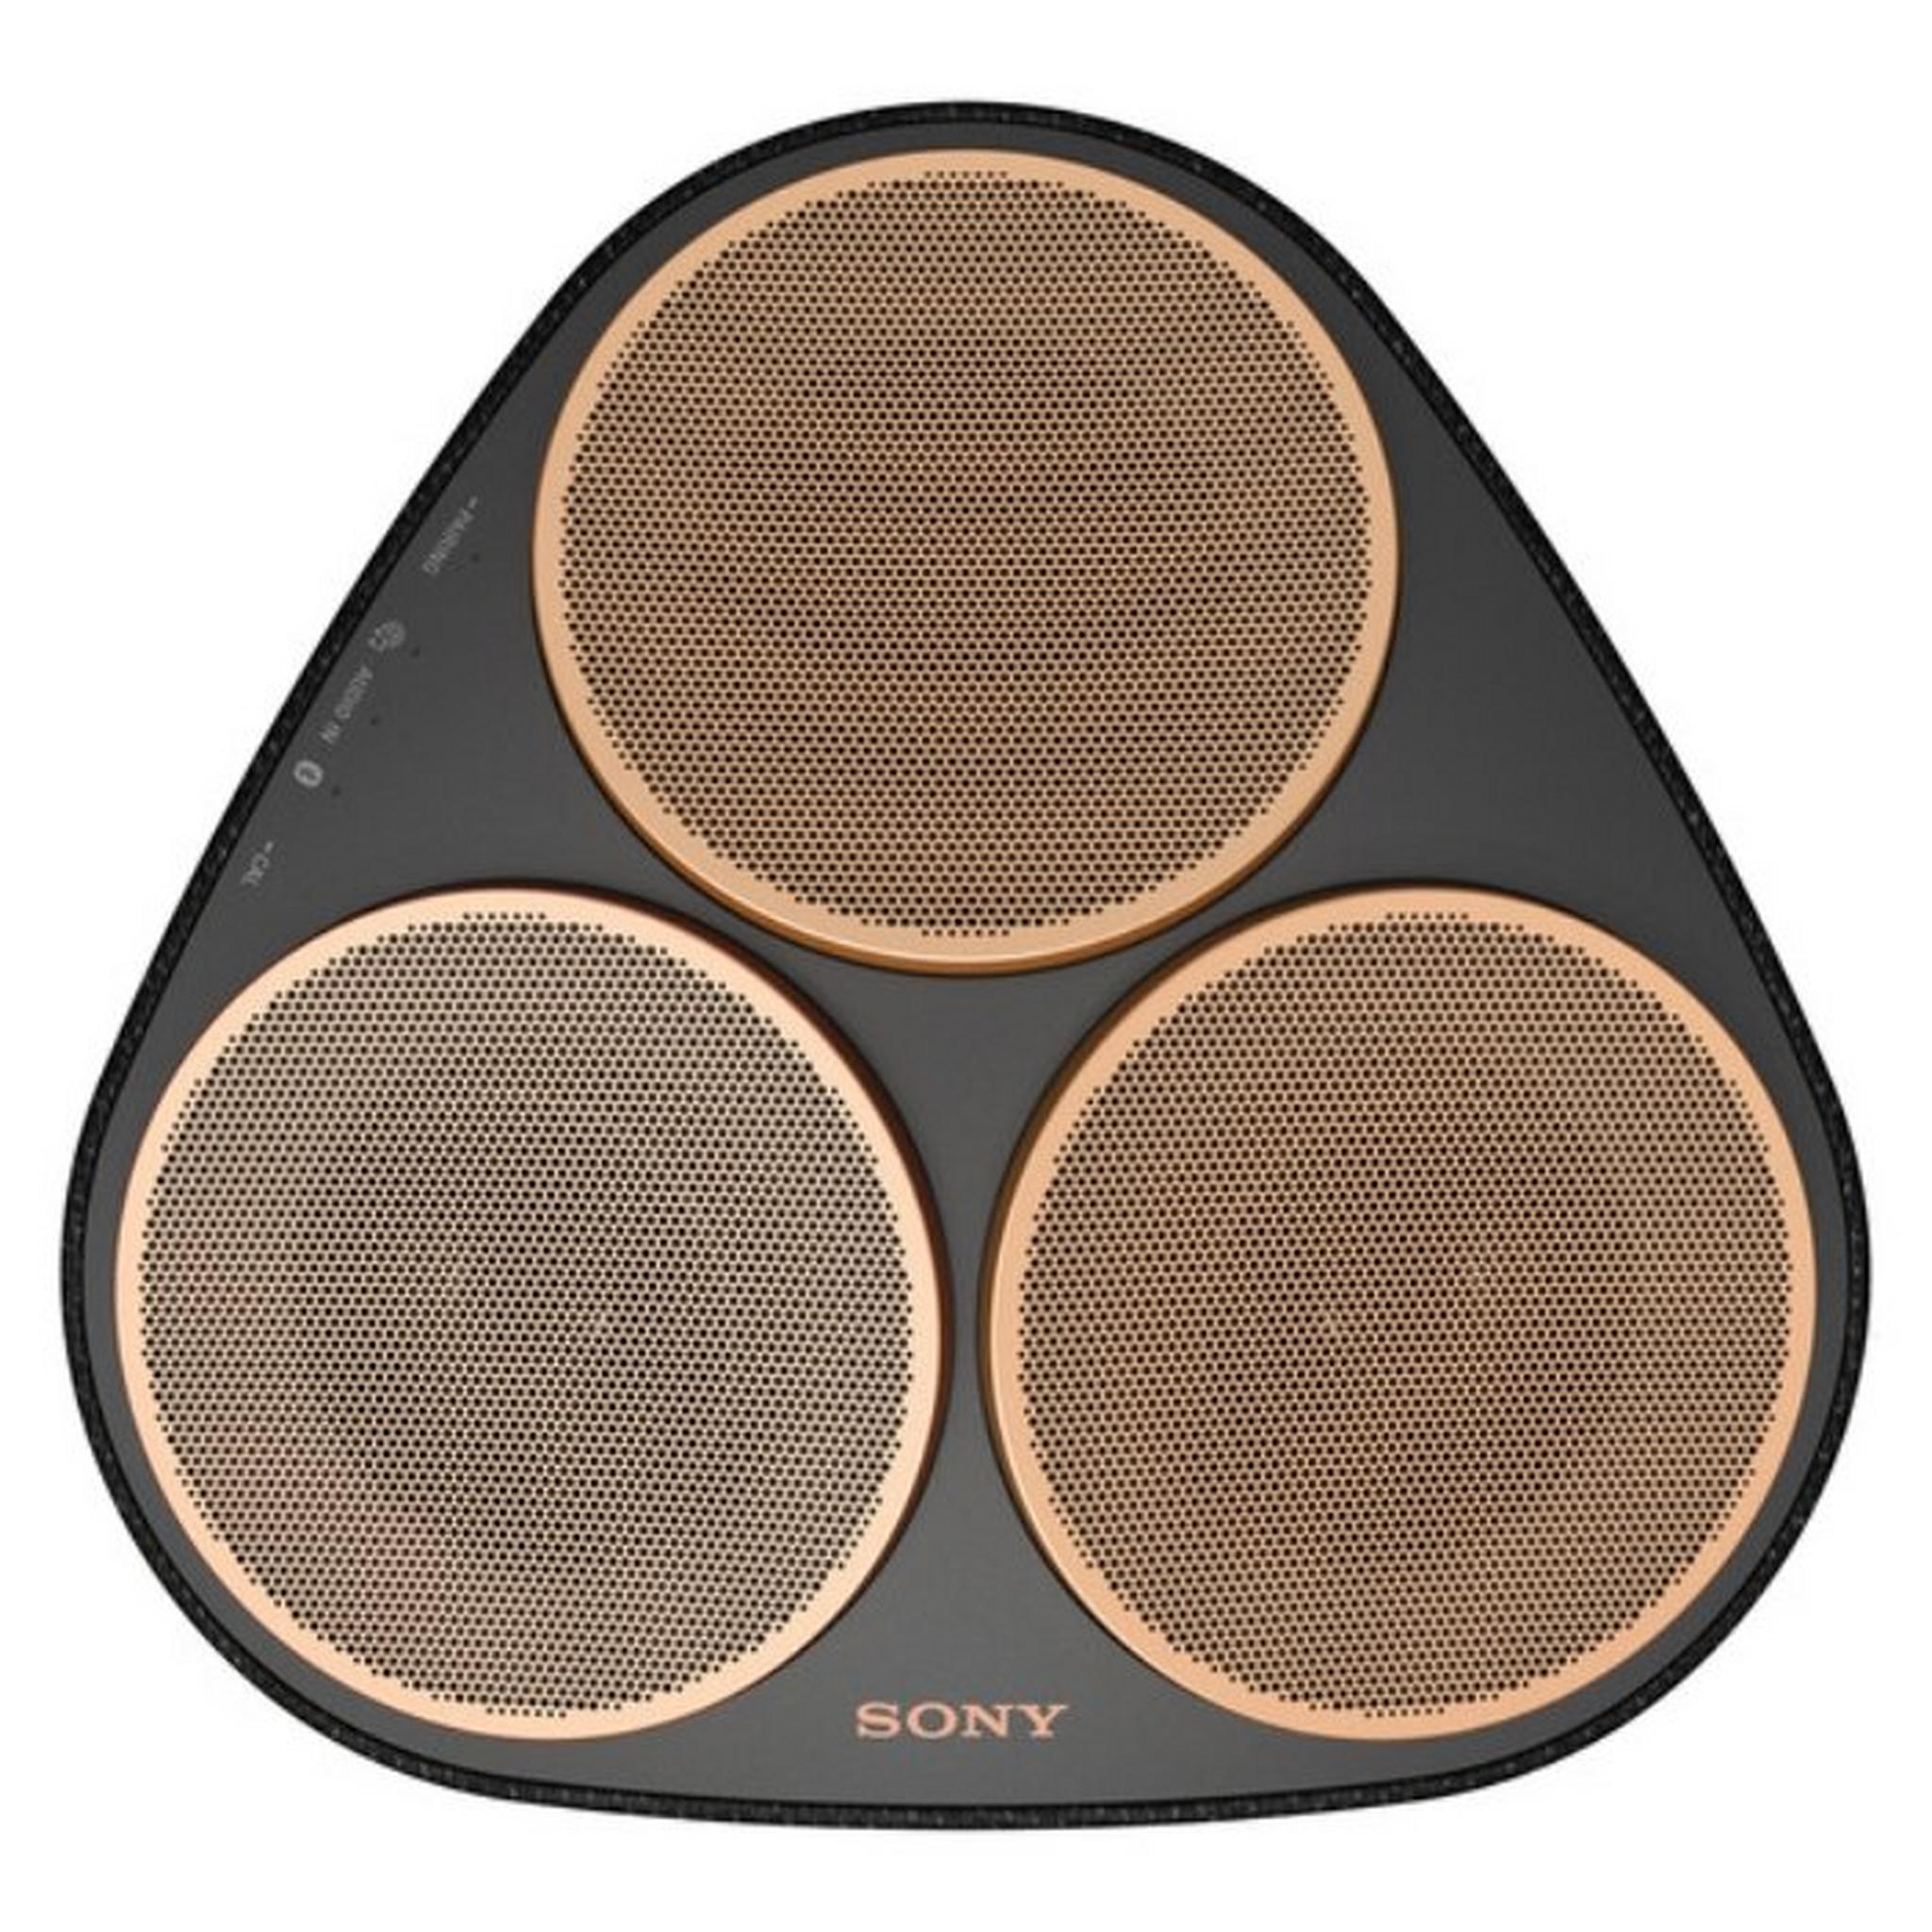 Sony Premium Wireless Speaker - Black (SRS-RA5000)